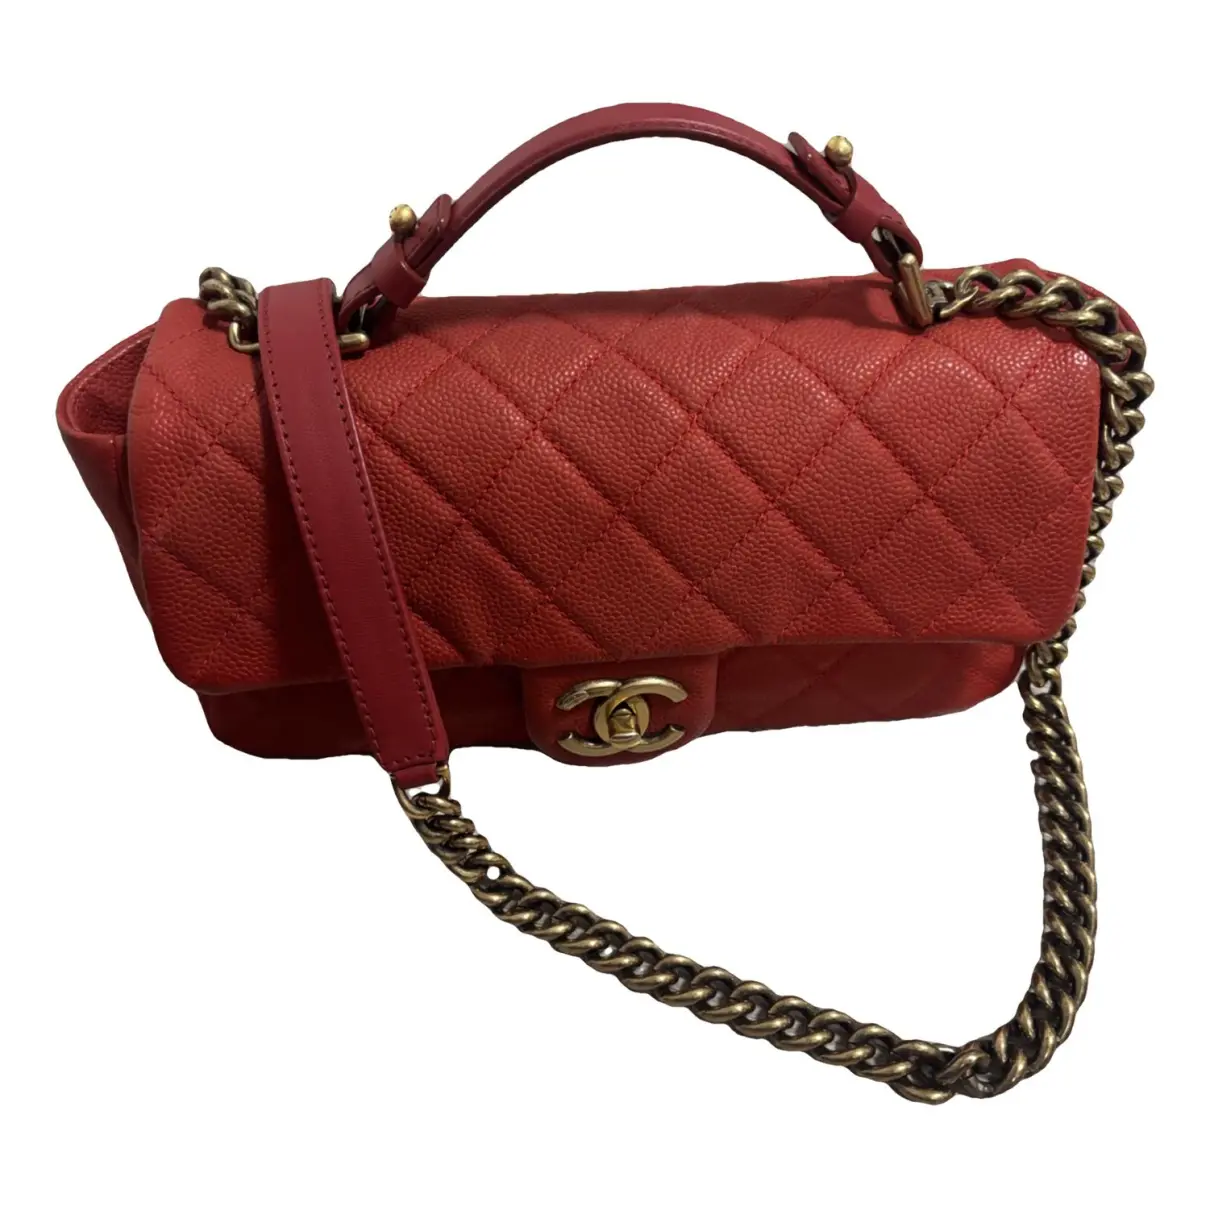 Easy Carry leather handbag